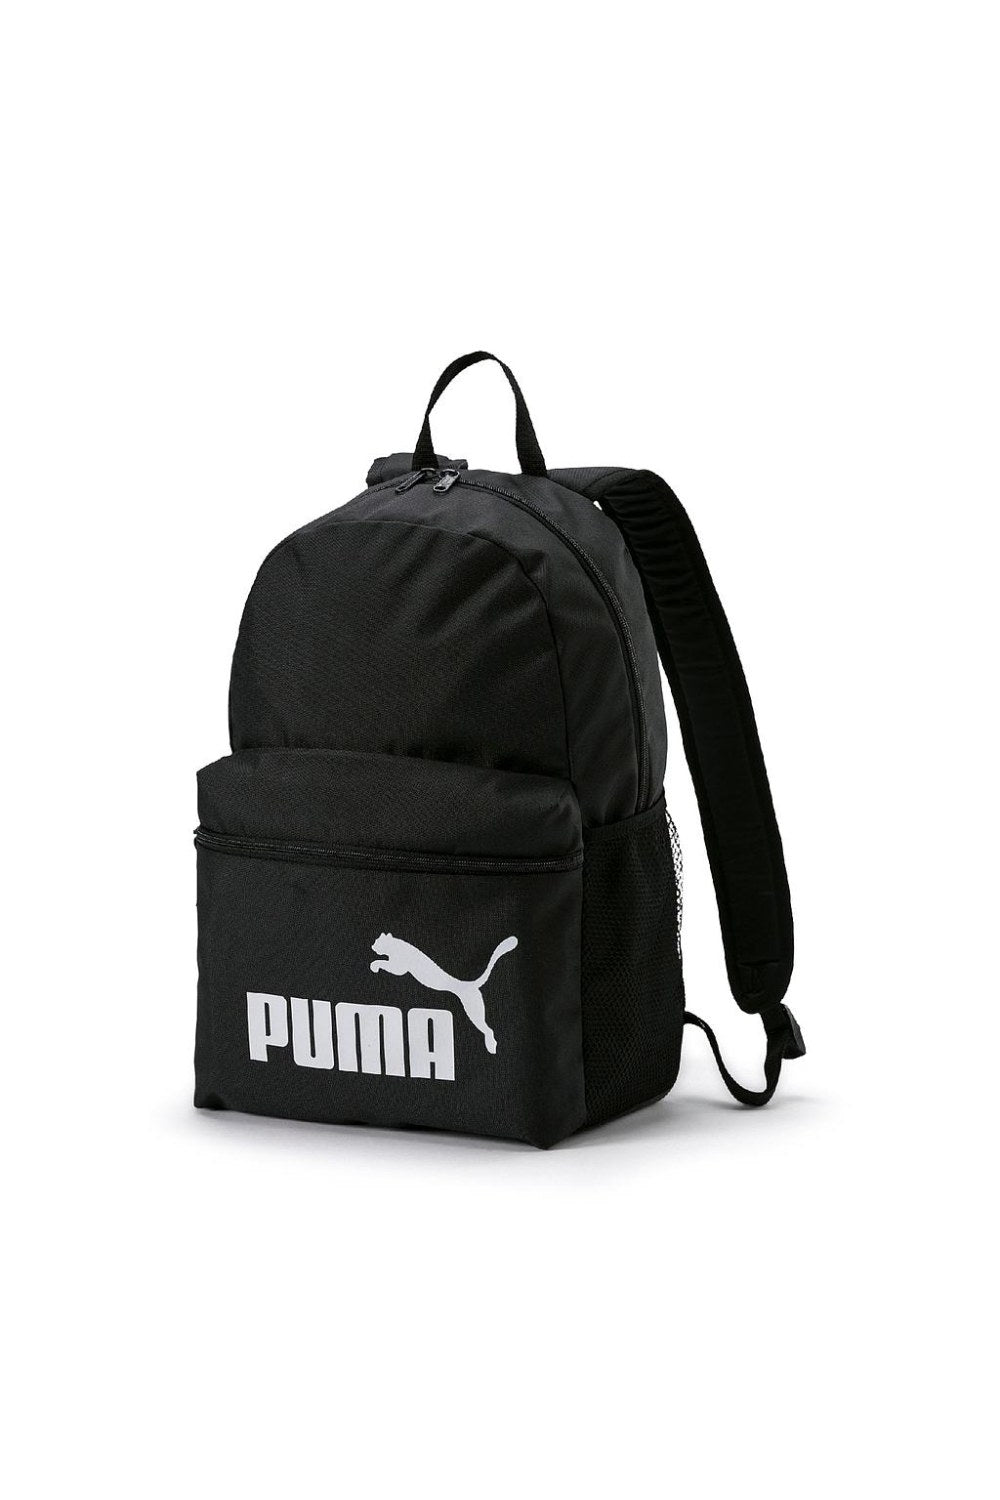 Phase Backpack (Black)